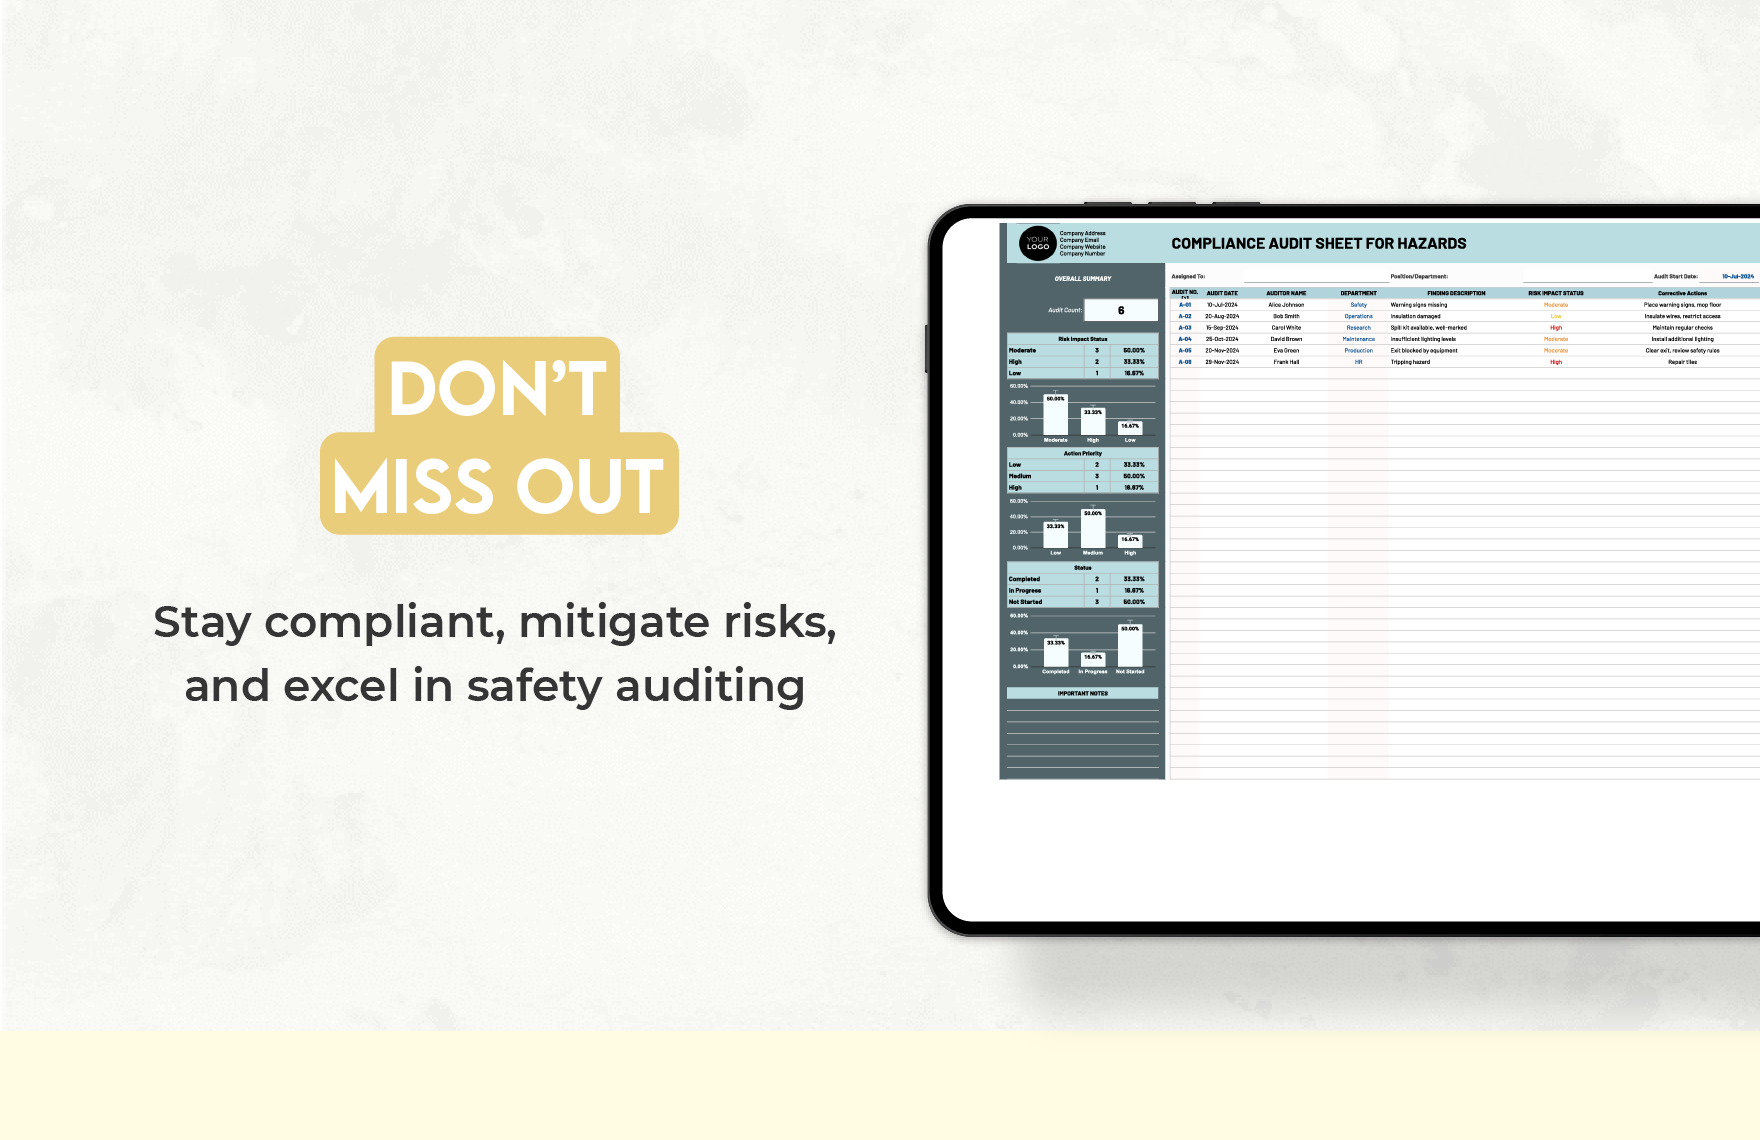 Compliance Audit Sheet for Hazards Template